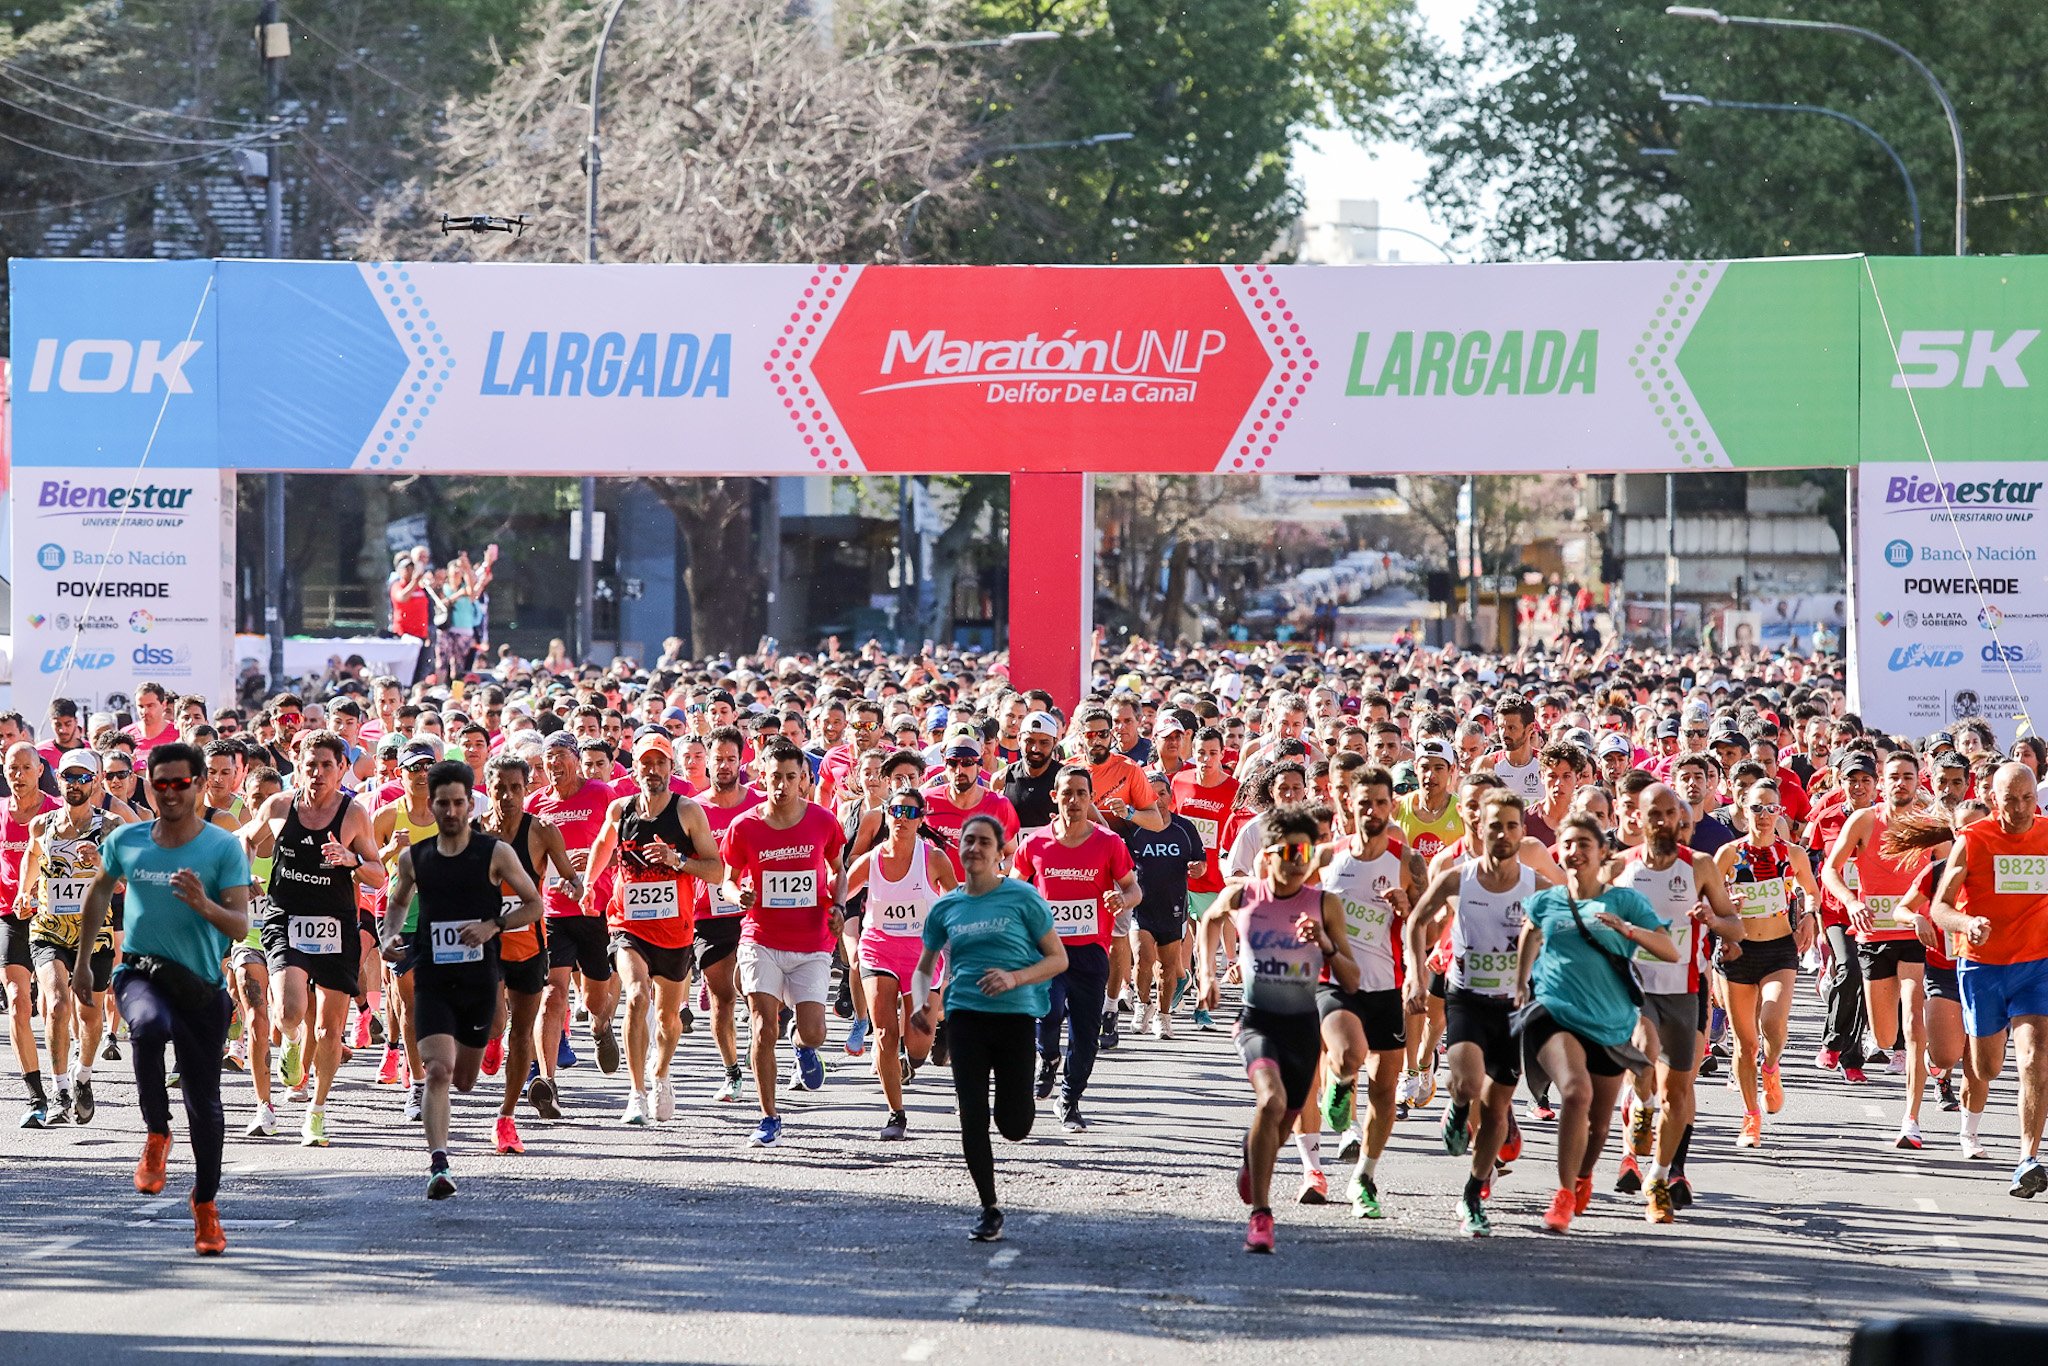 Maratón UNLP: Casi 14 mil runners corrieron en La Plata